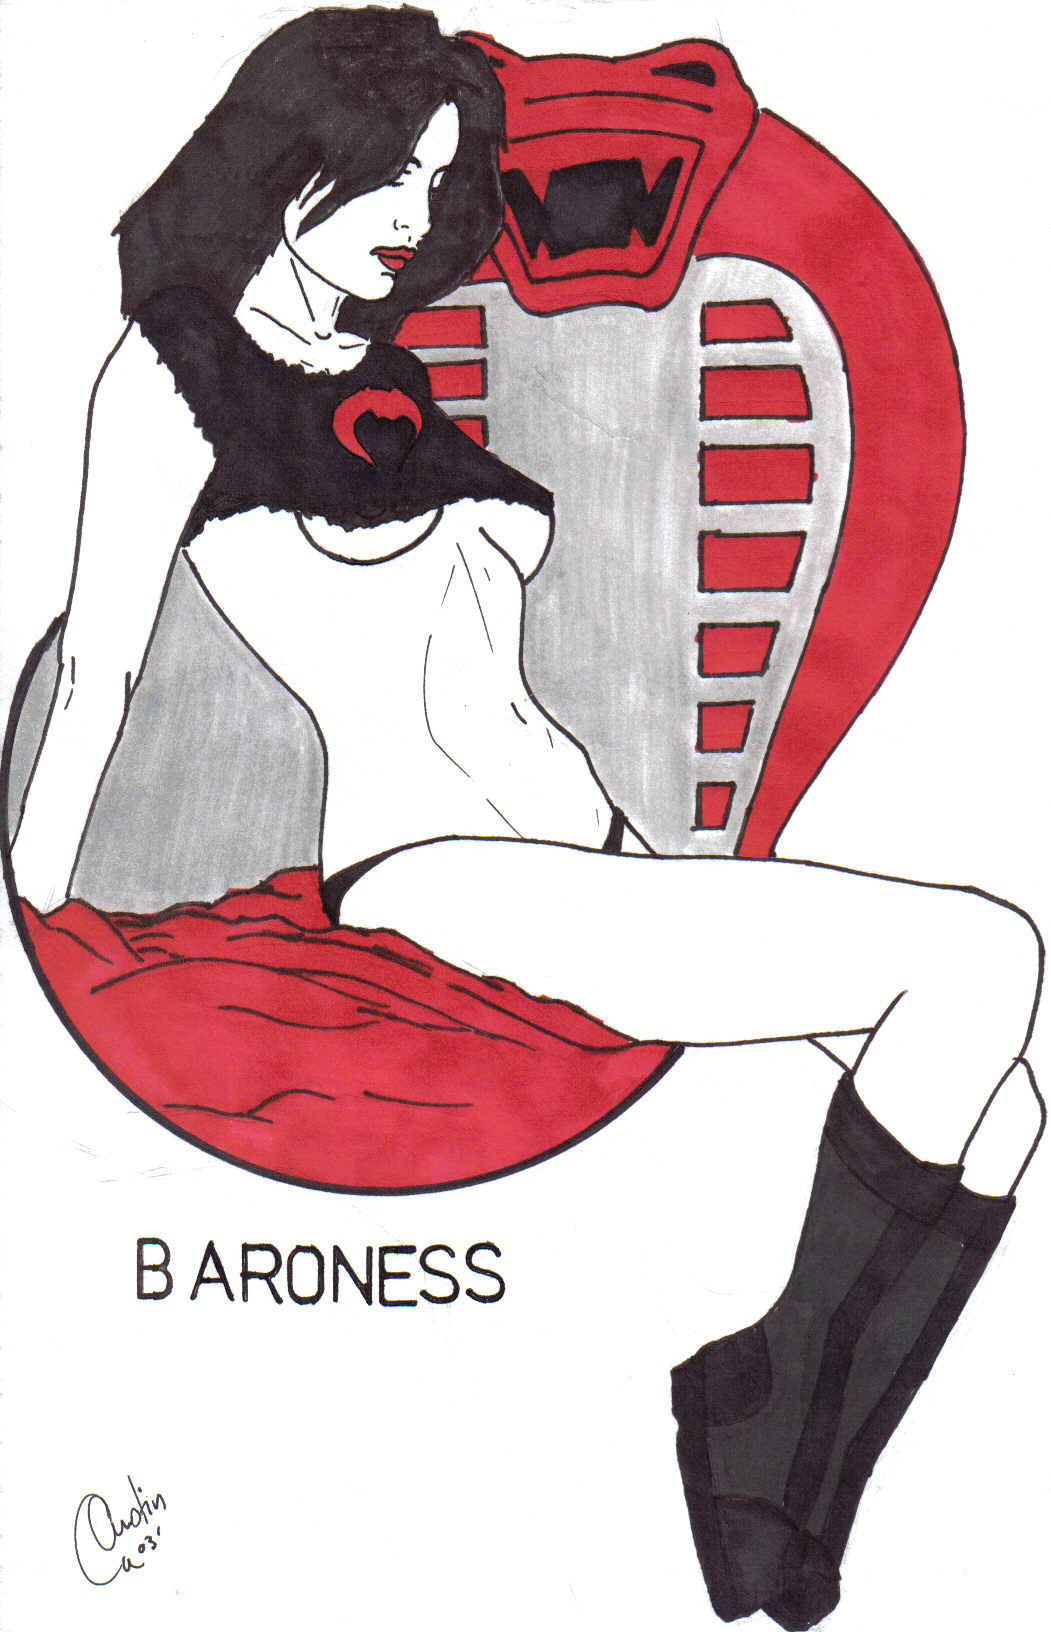 The Baroness Hentai and Non-H Art 